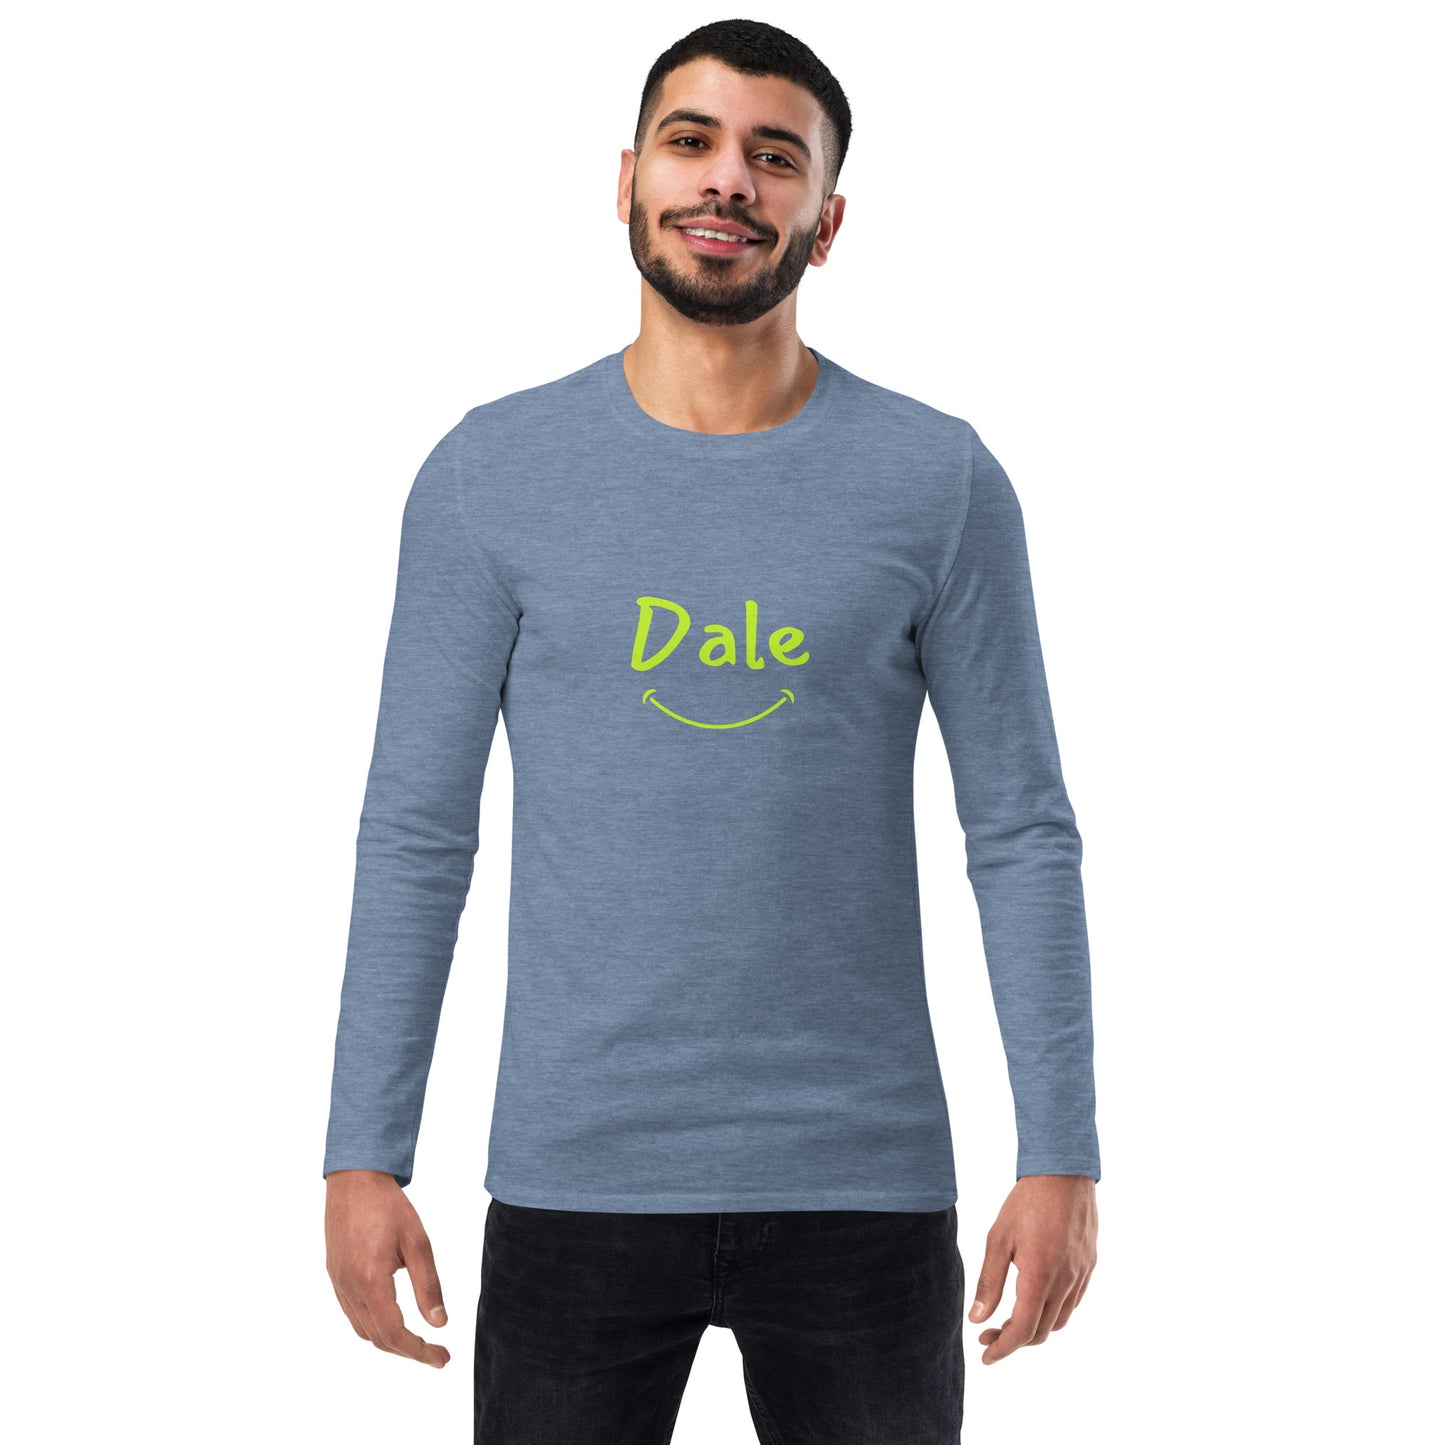 Dale Long sleeve shirt